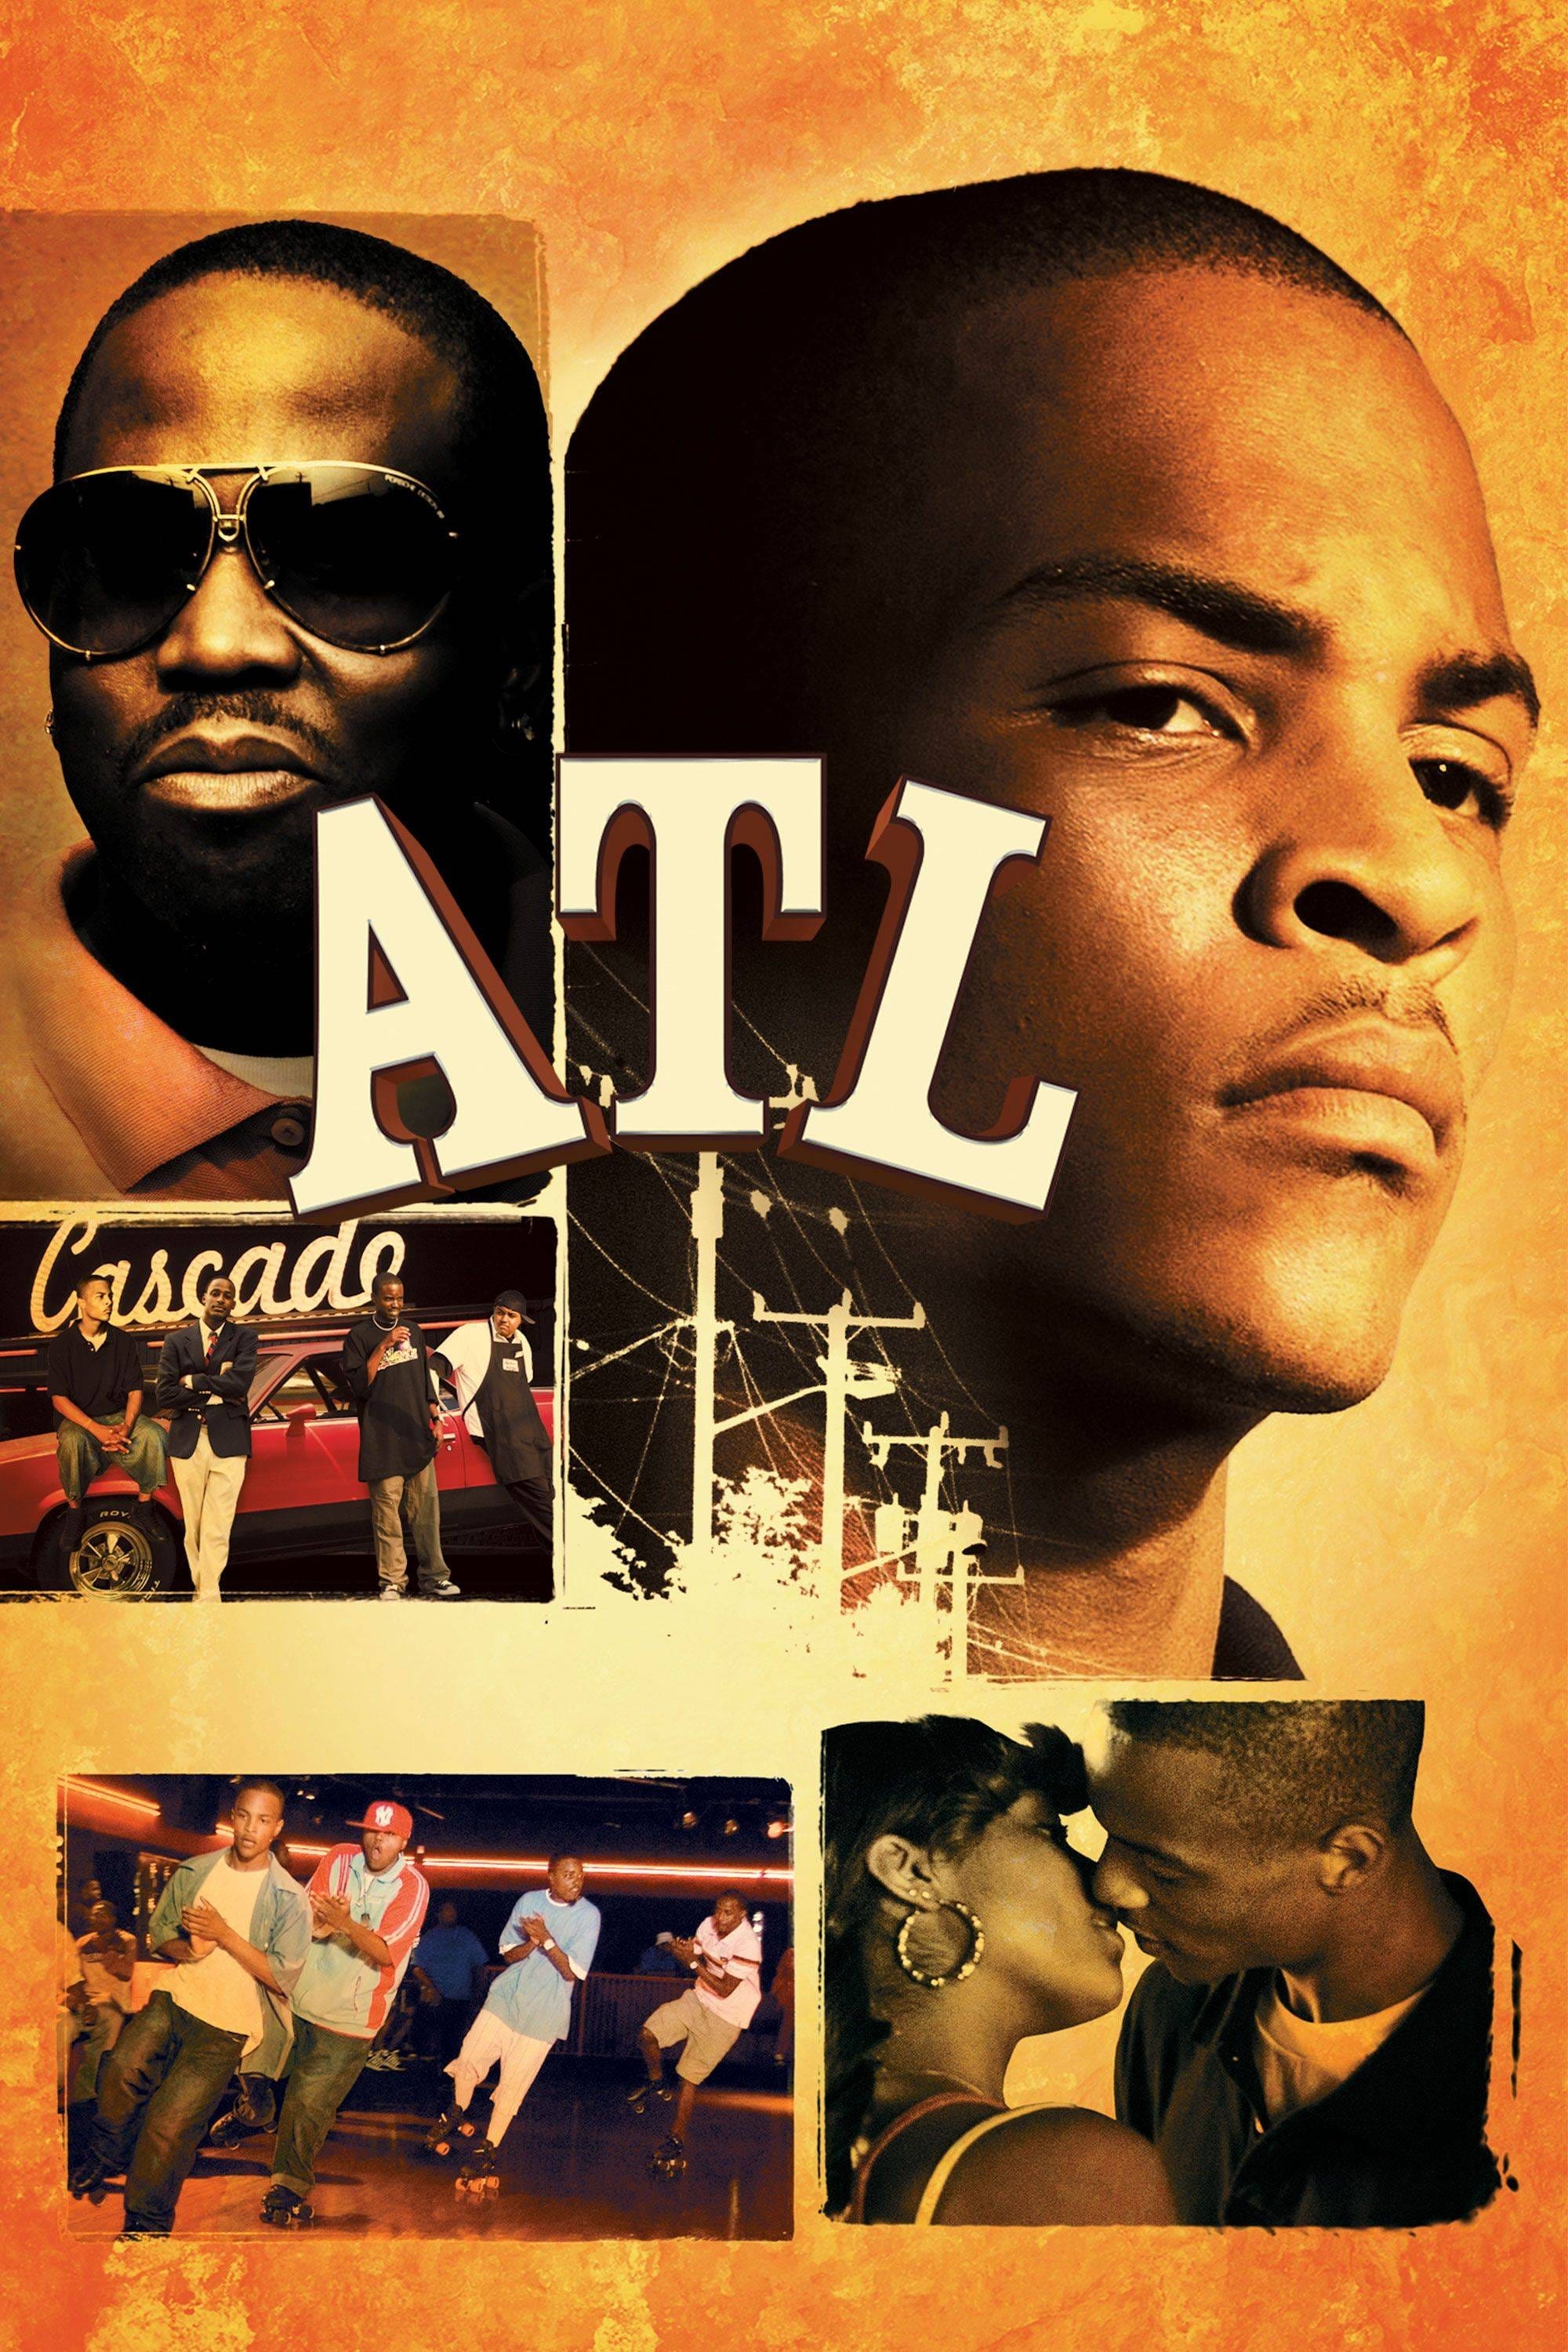 ATL (2006)